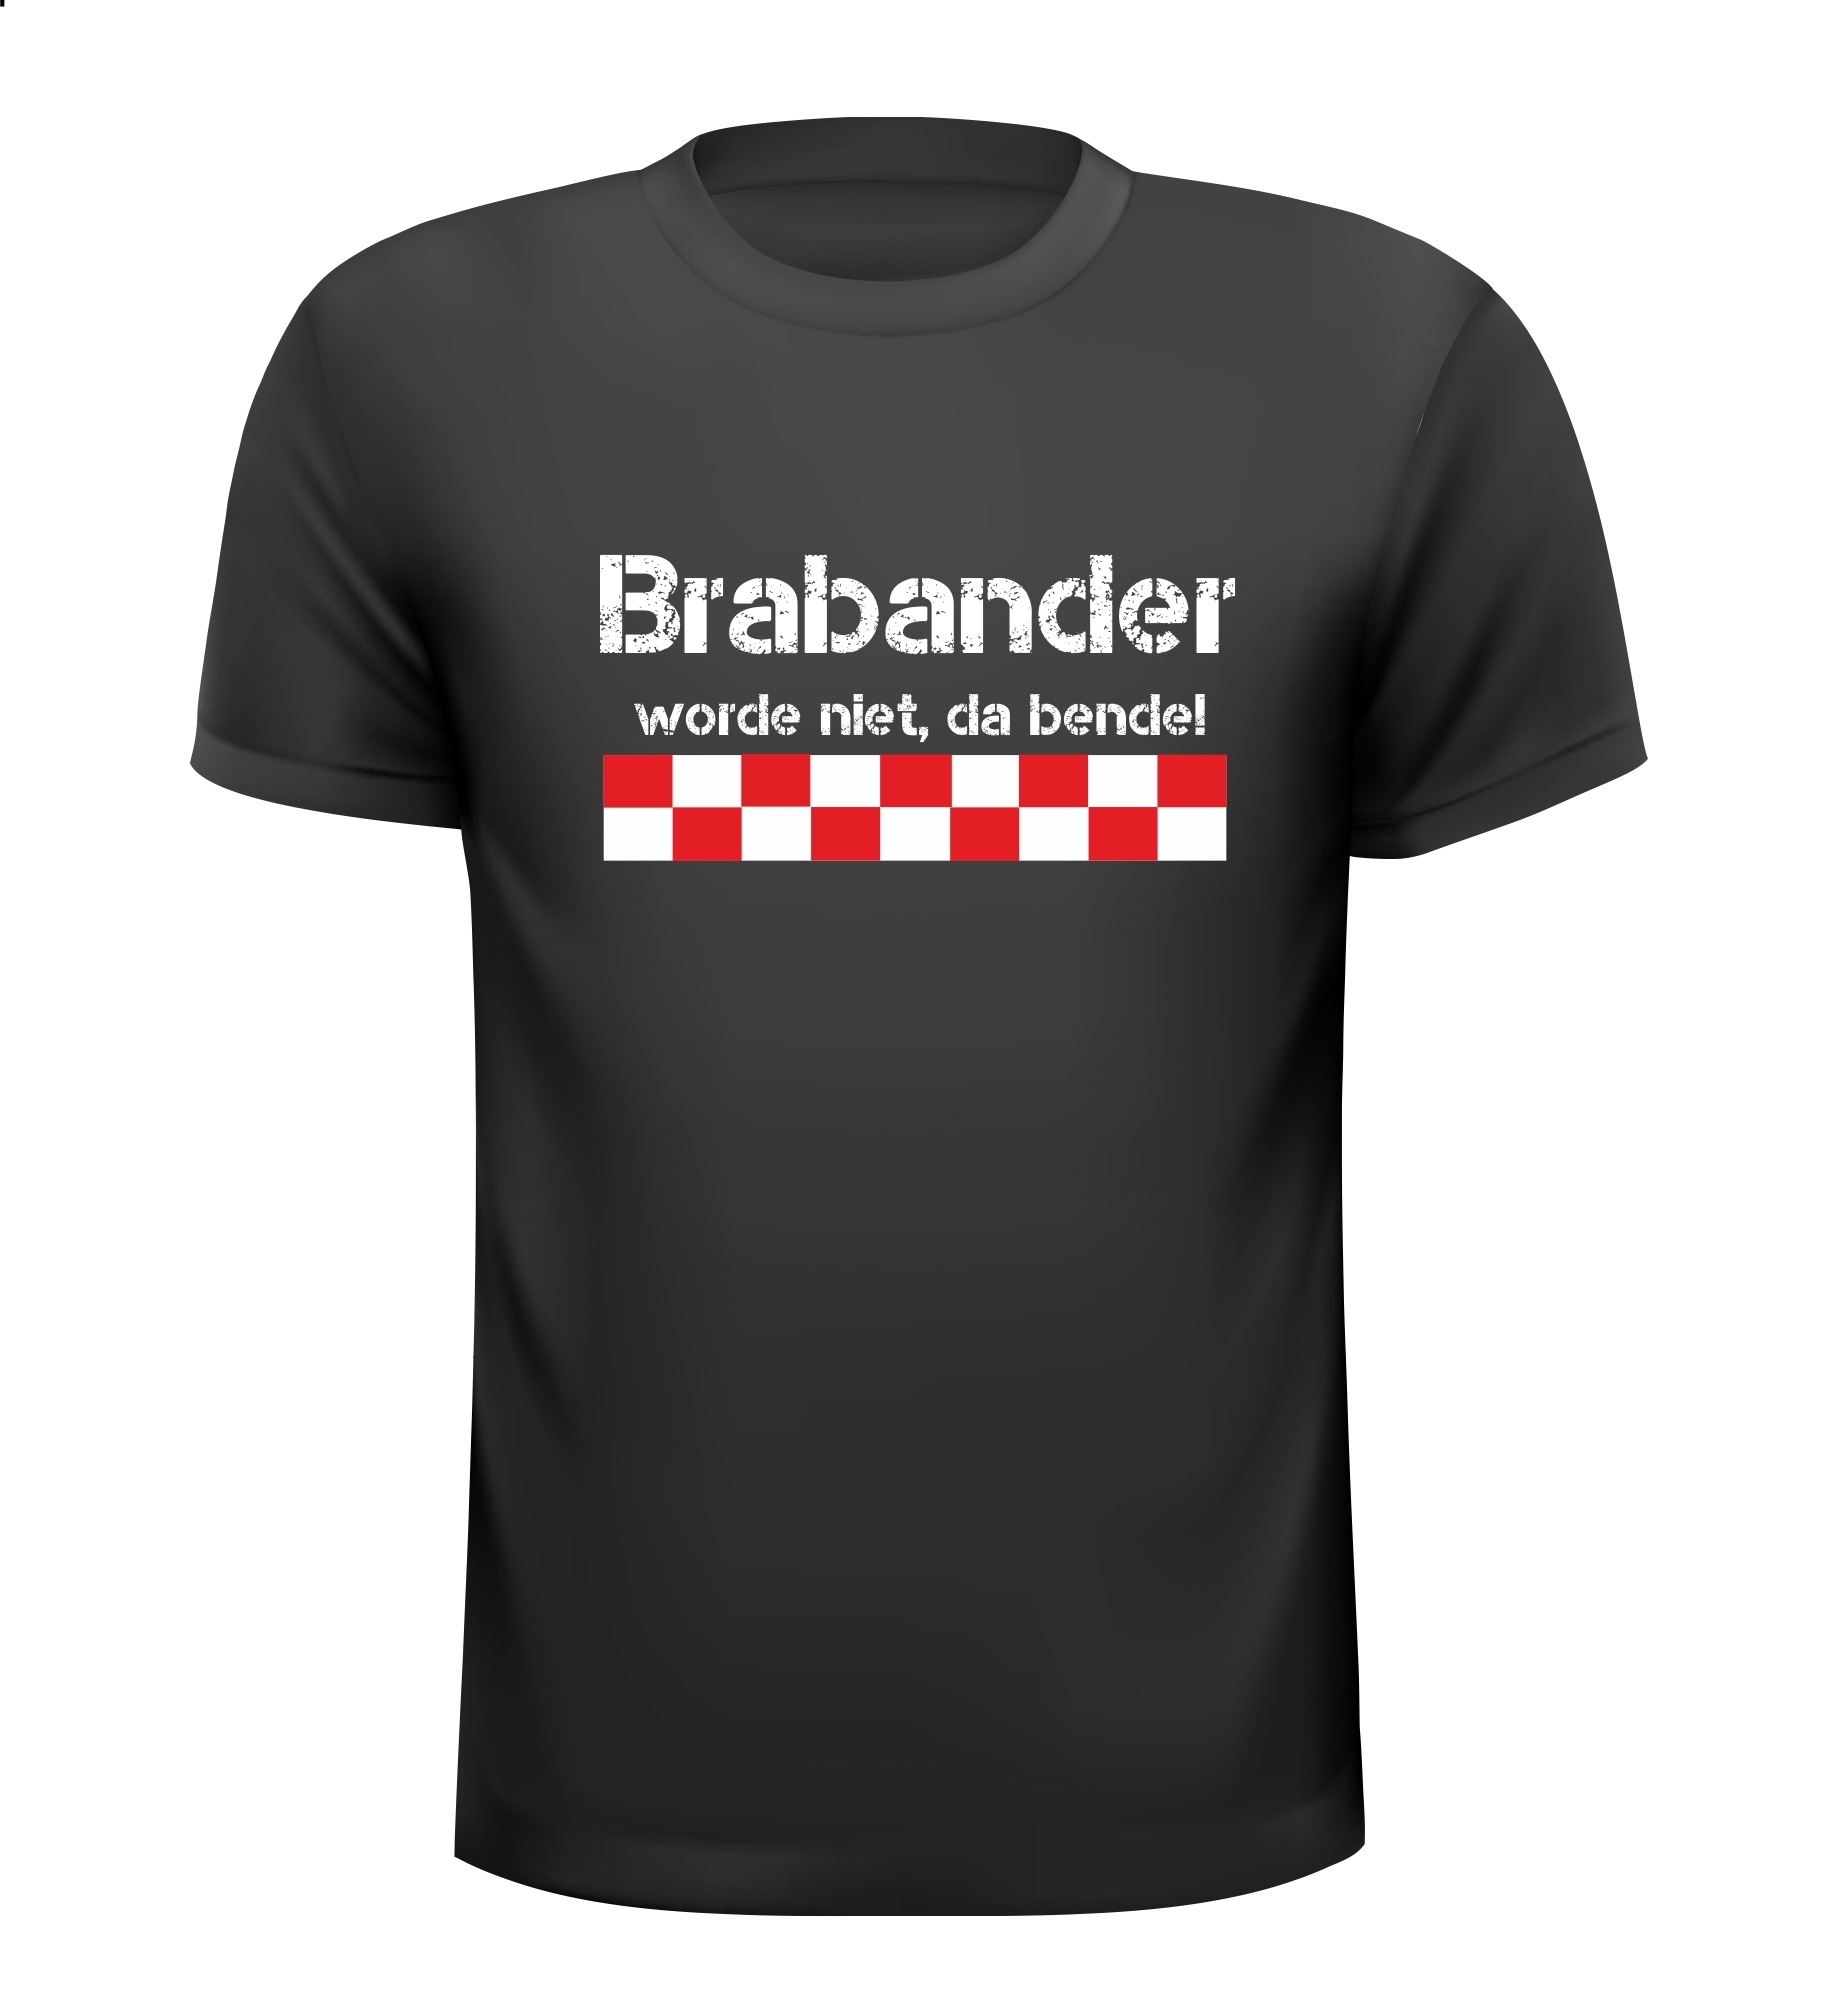 Fout Brabant Shirtje Brabander worde niet, da bende!